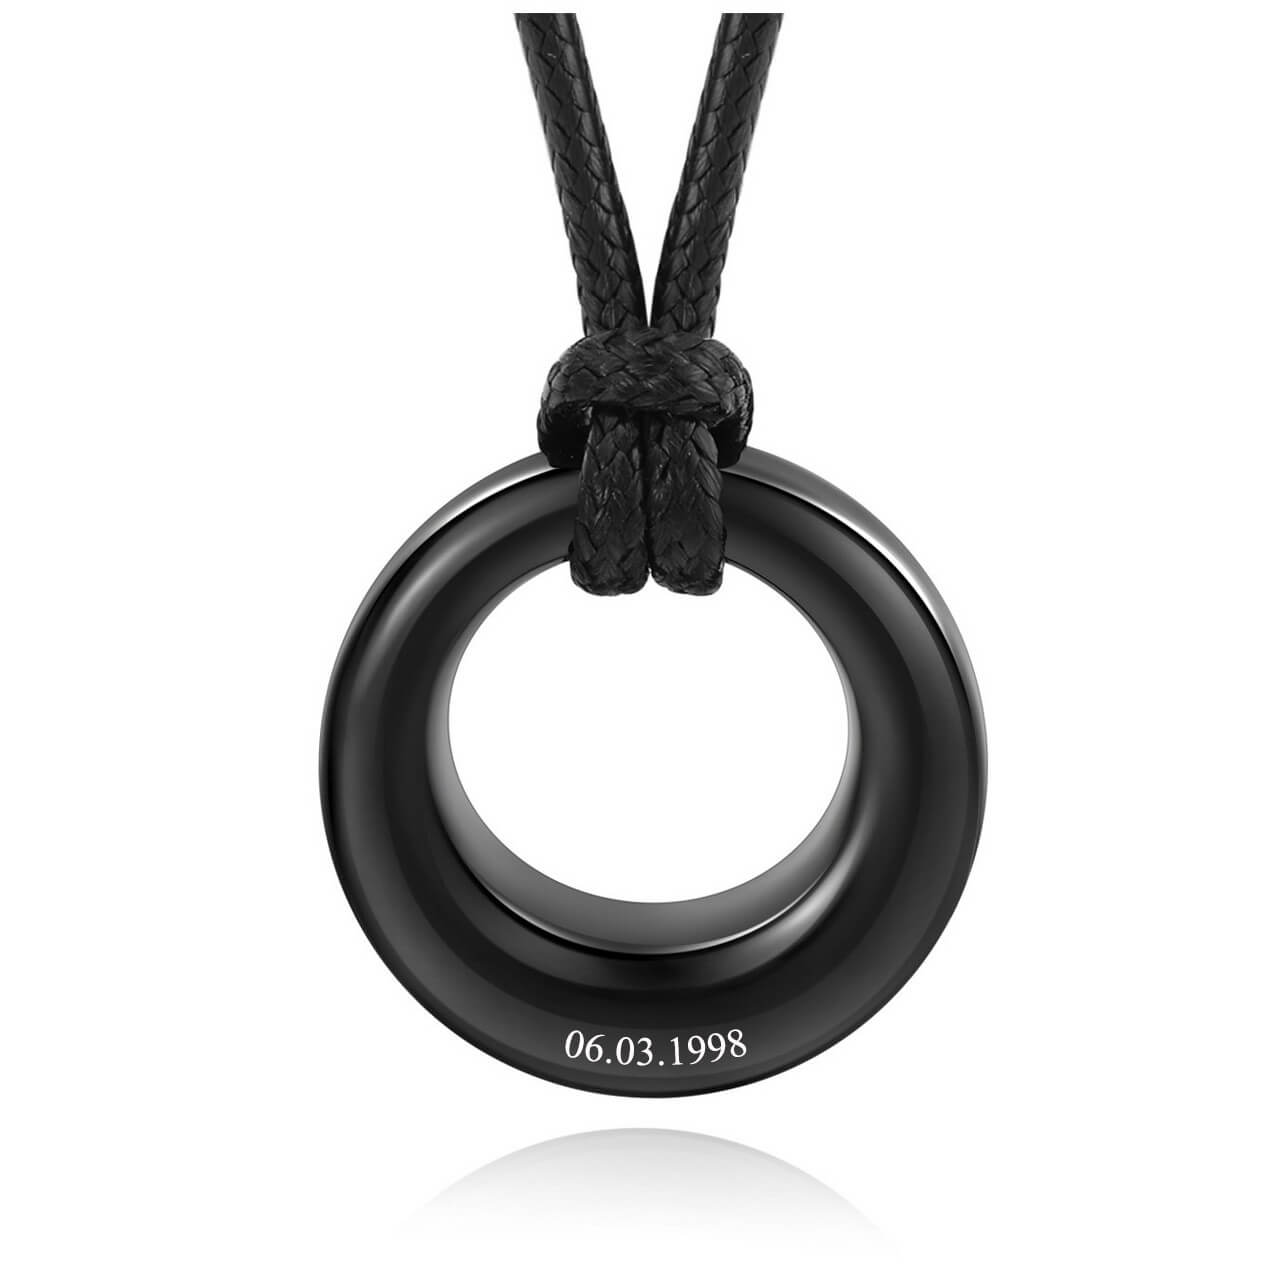 Jovivi personalized circle of life eternity memorial keepsake pendant 